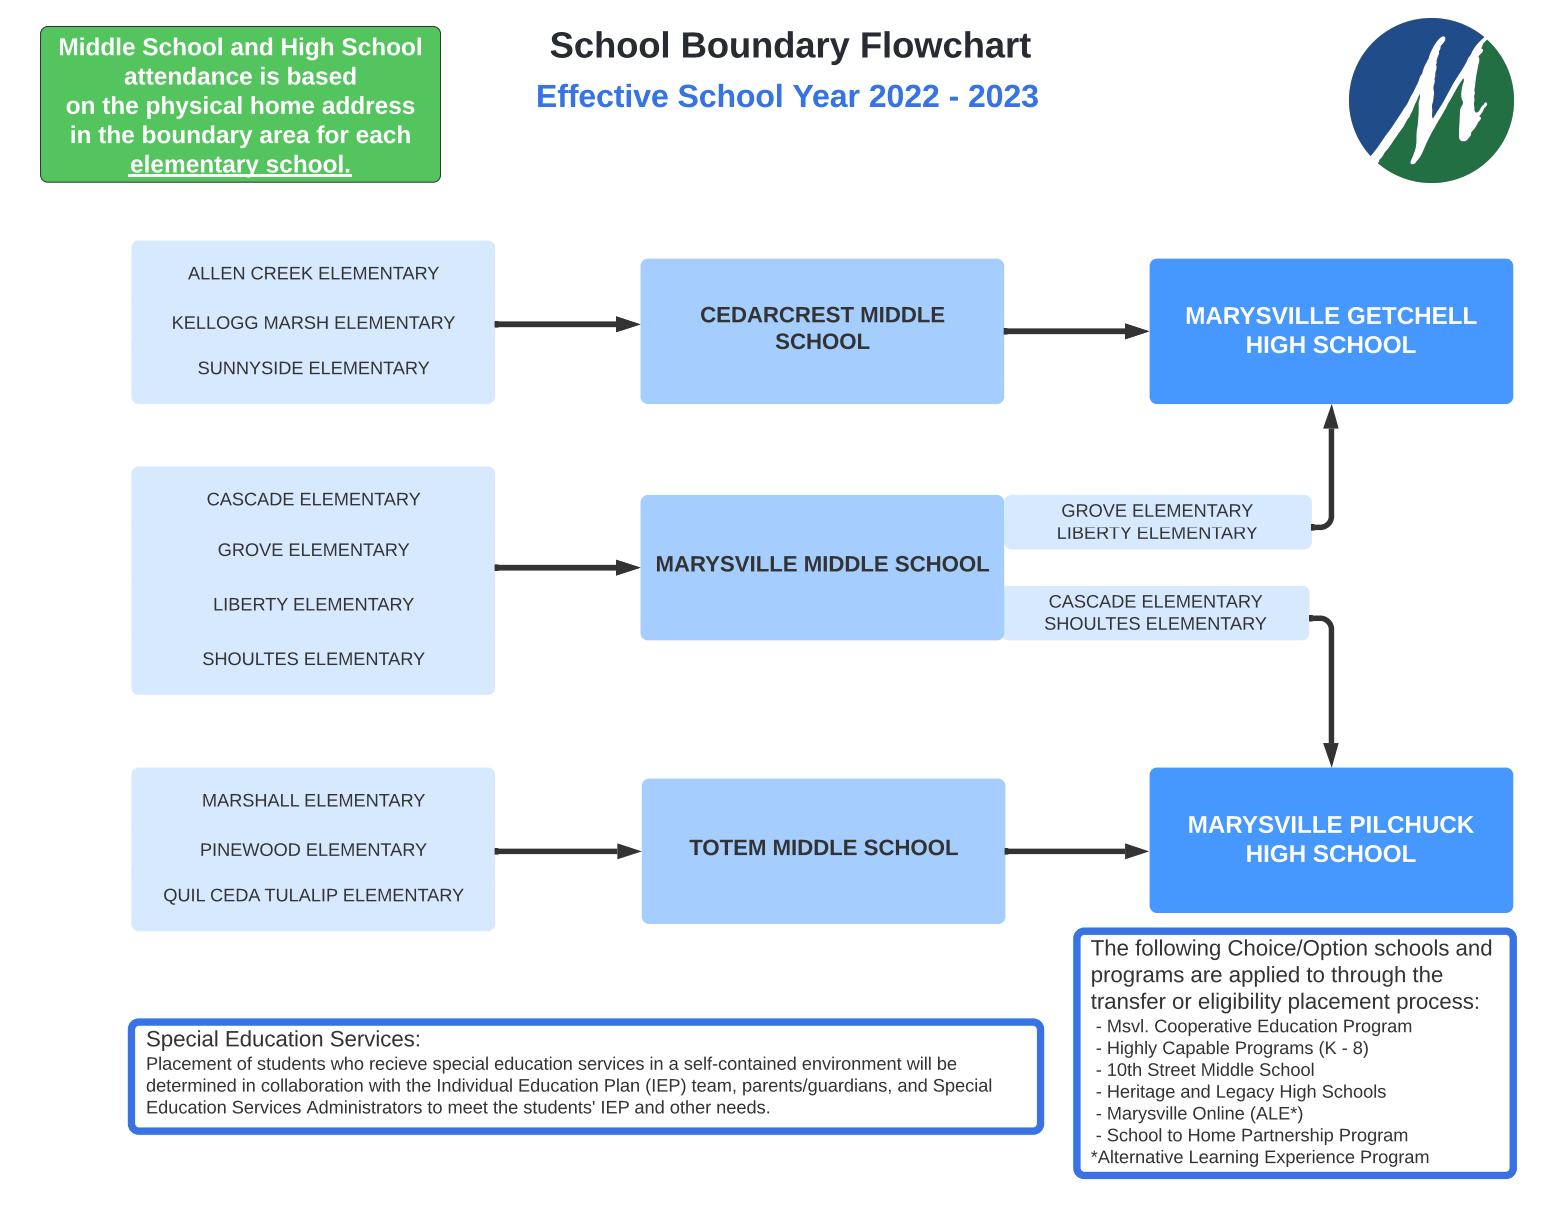 School Boundary Flowchart 2022 - 2023